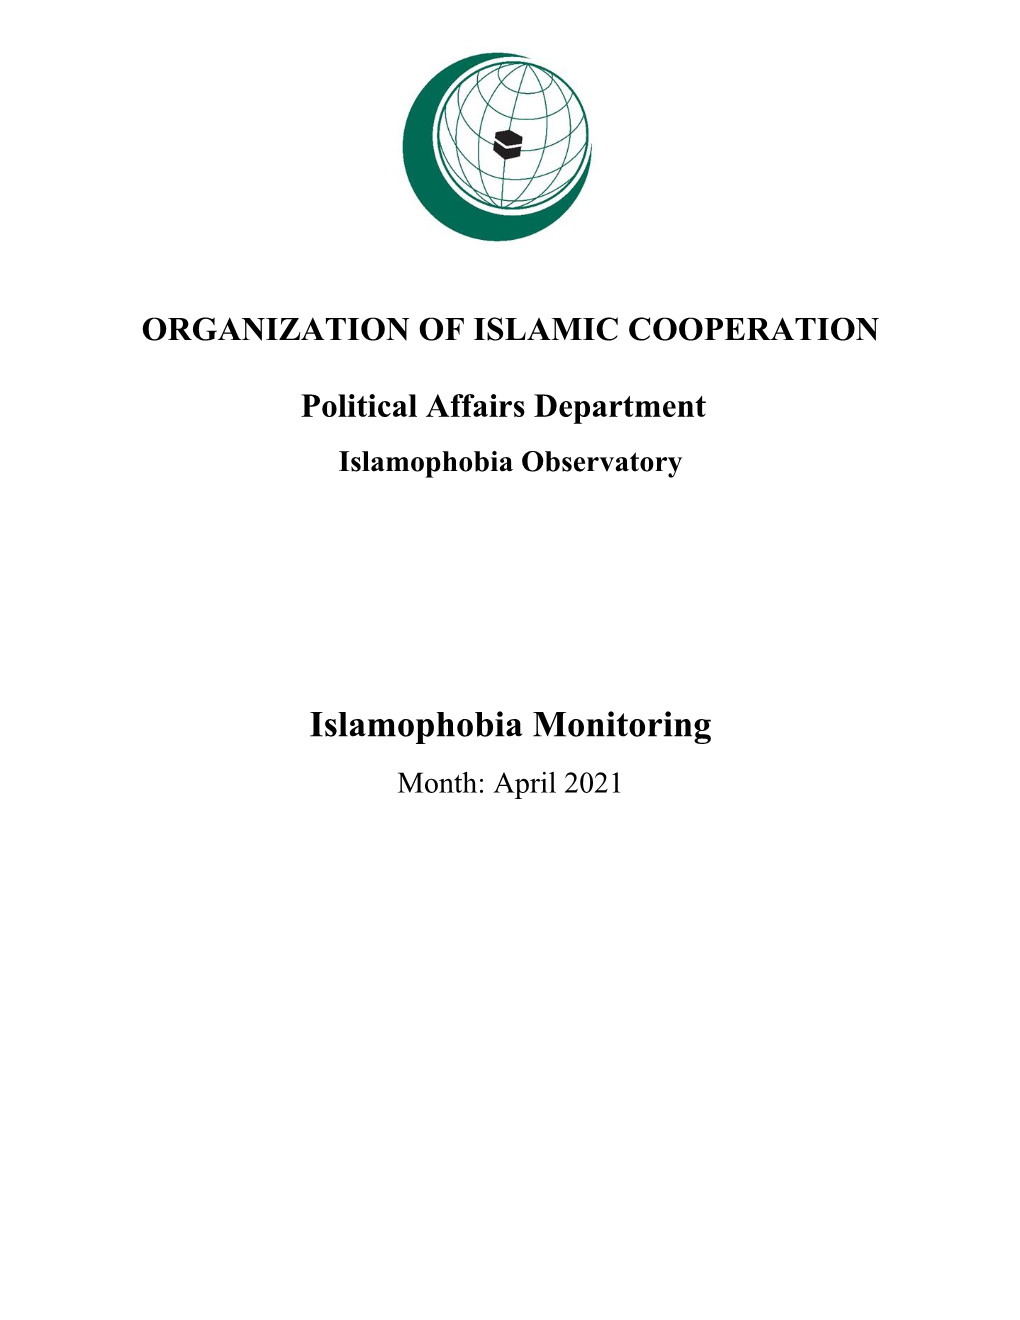 Islamophobia Monitoring Month: April 2021